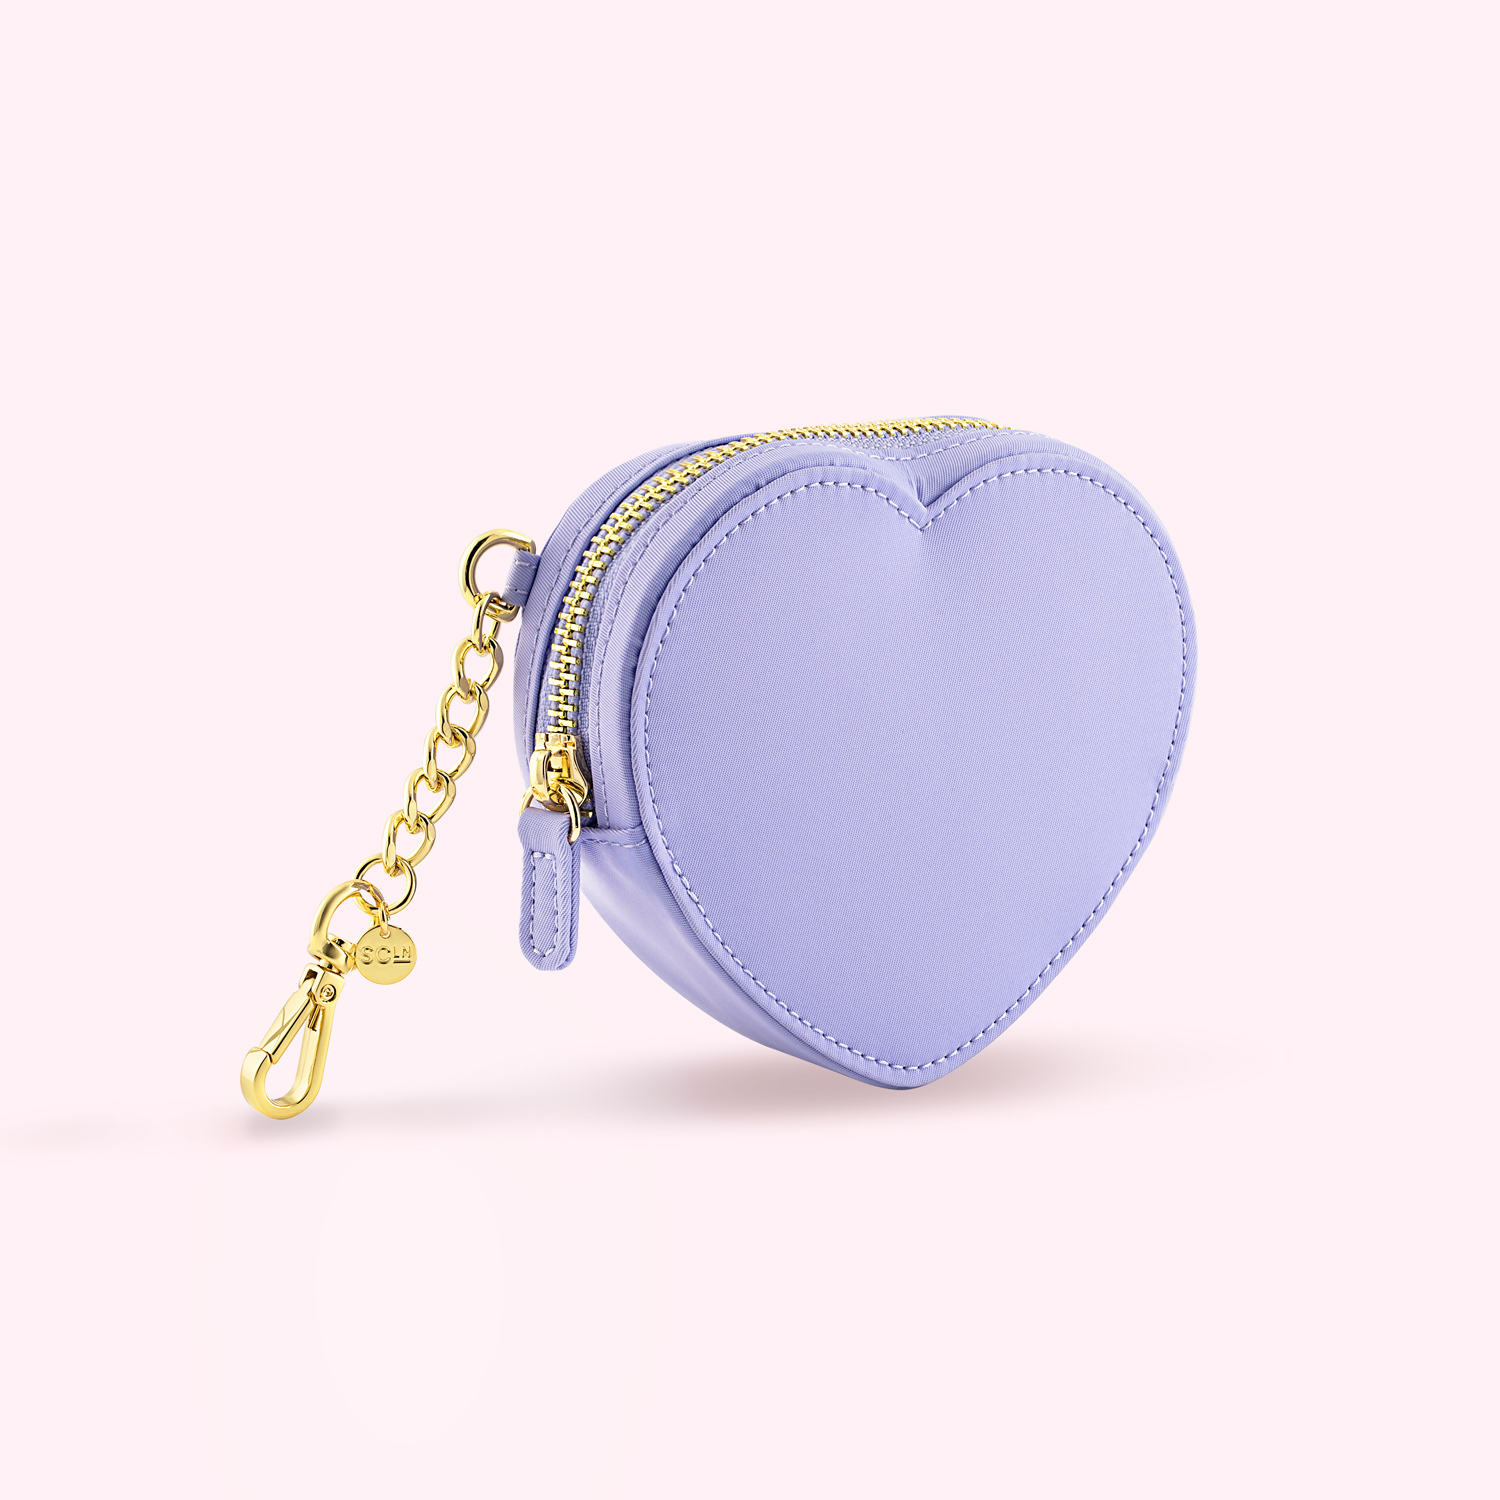 heart-shaped coin purse